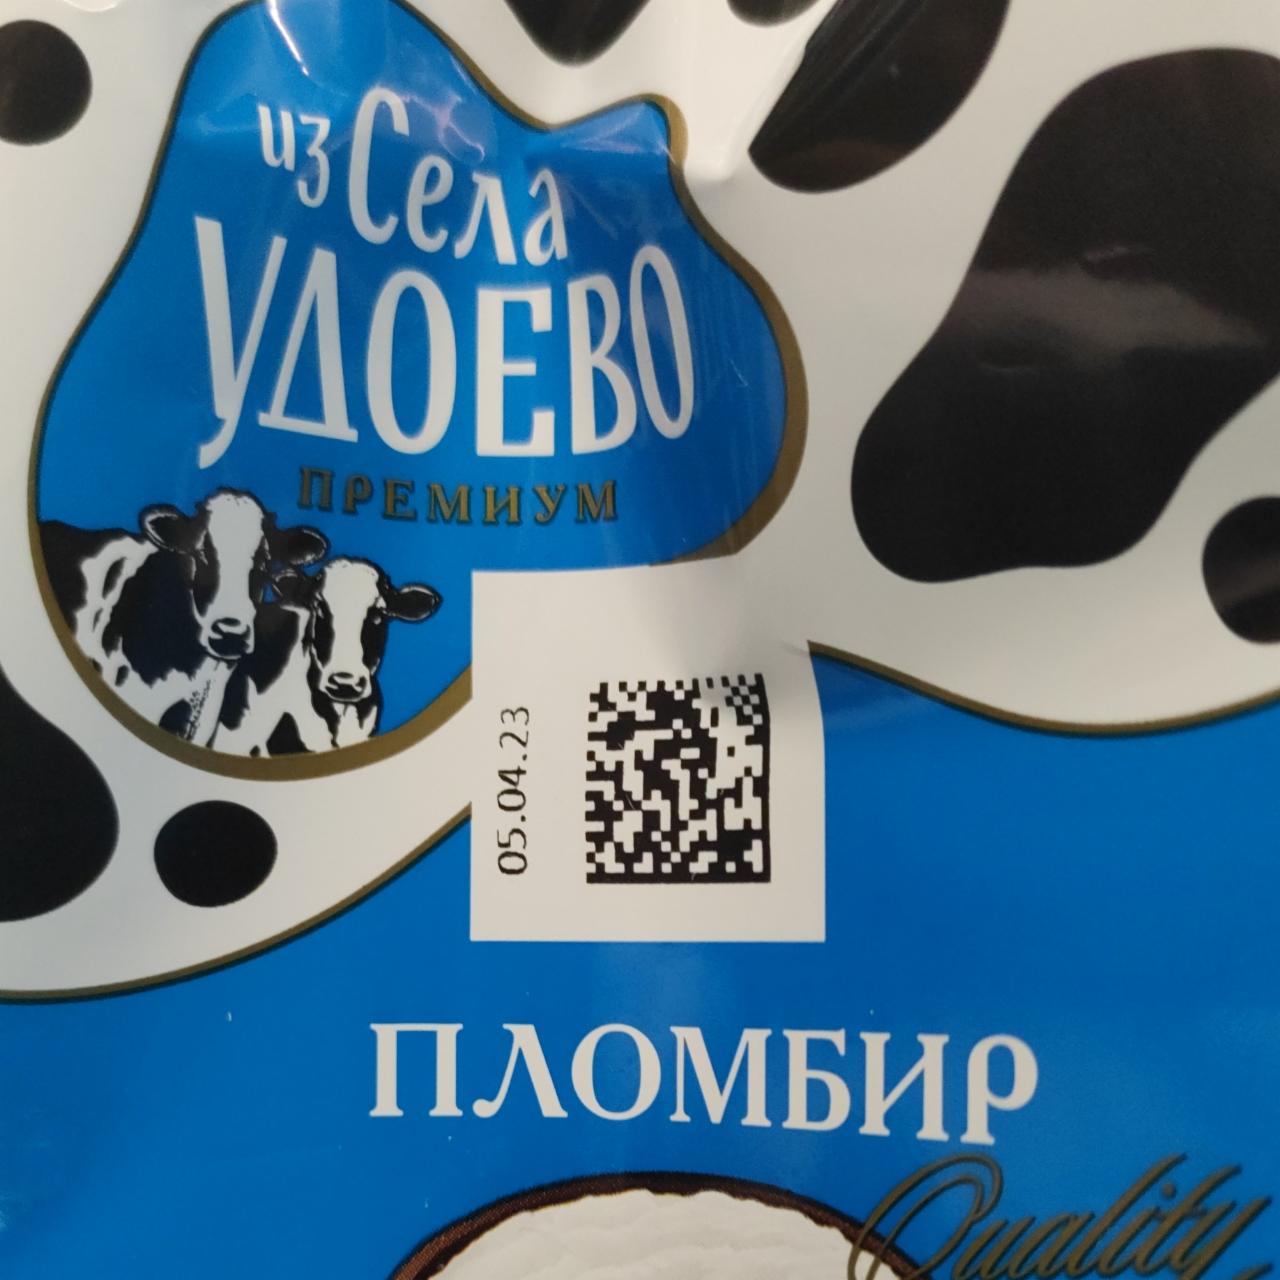 Фото - Мороженое пломбир марка Из села удоево